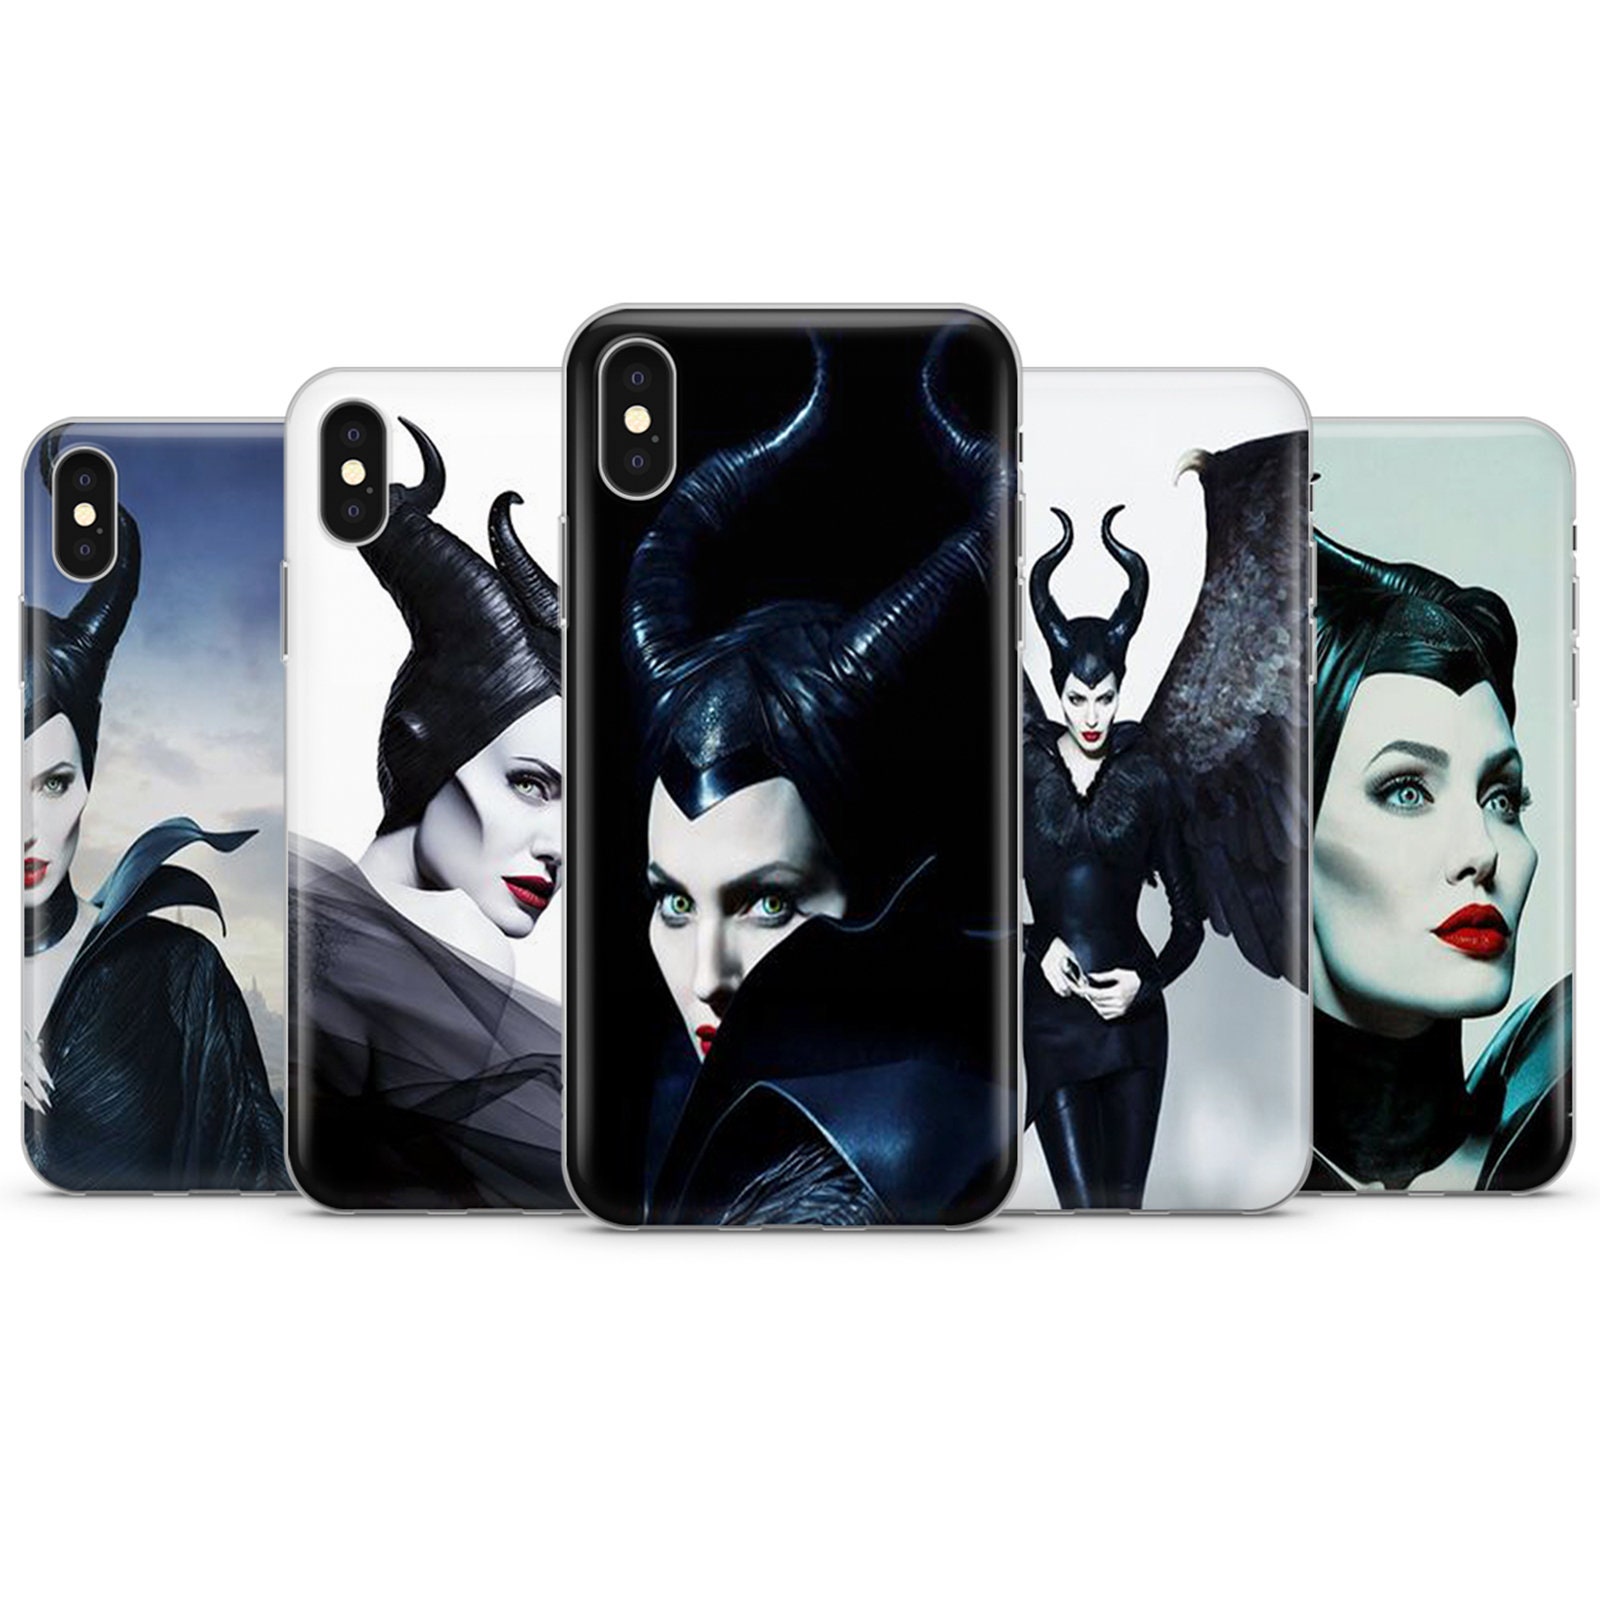 Loungefly Disney Villains Ursula Maleficent Tech Clutch Phone Cover Wallet  NWT